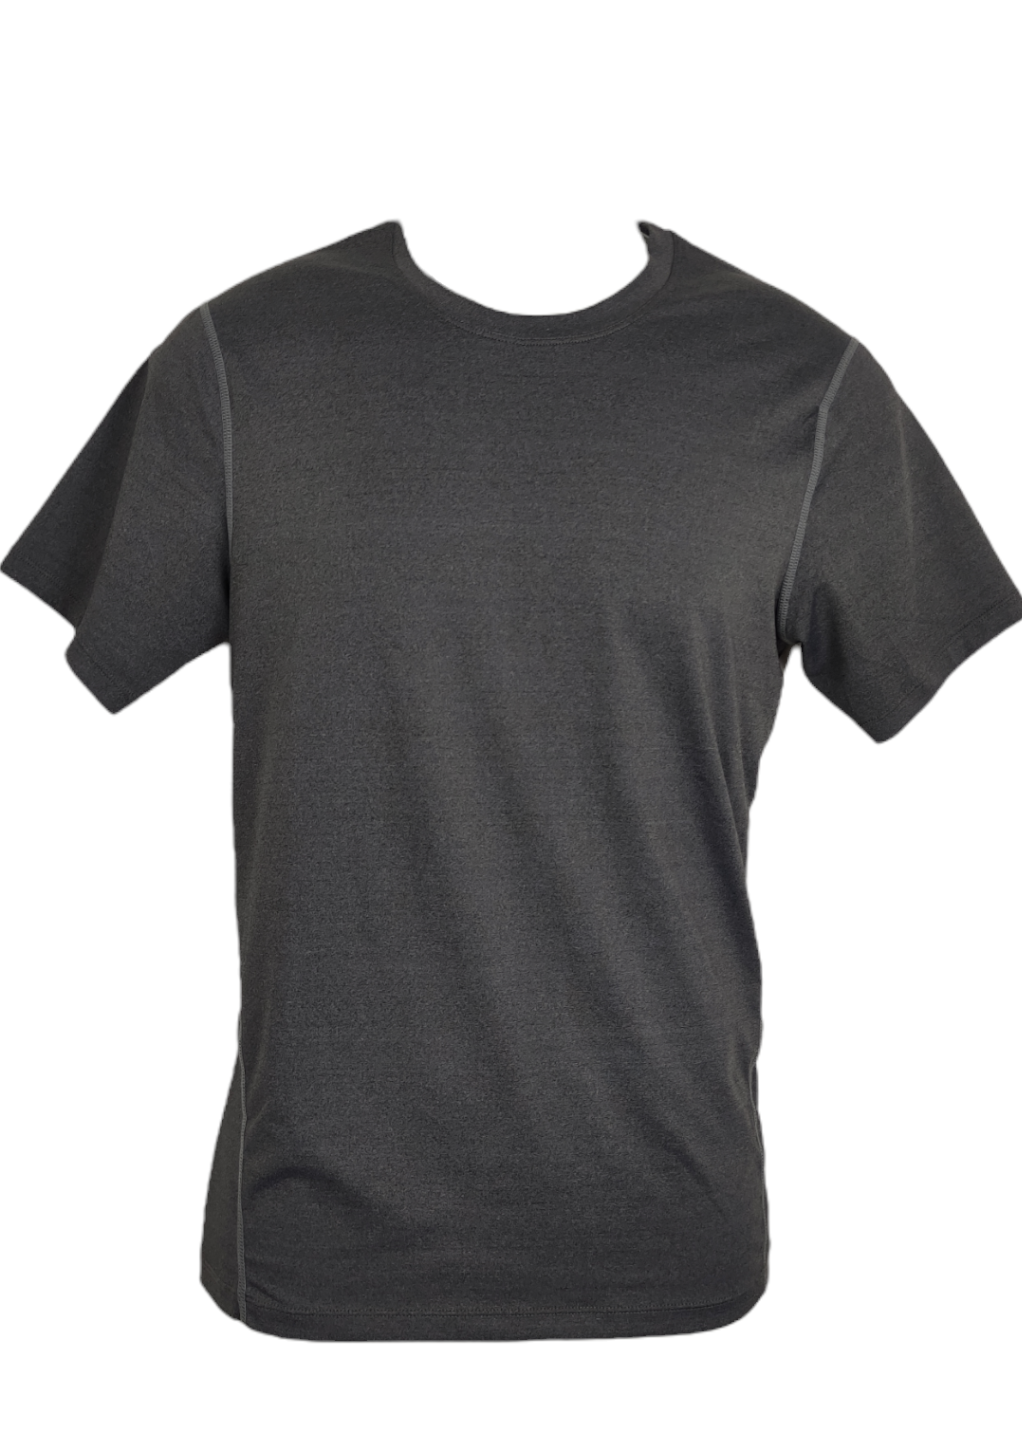 Aνδρική Αθλητική Mπλούζα - T-Shirt σε Γκρι Χρώμα (Large)